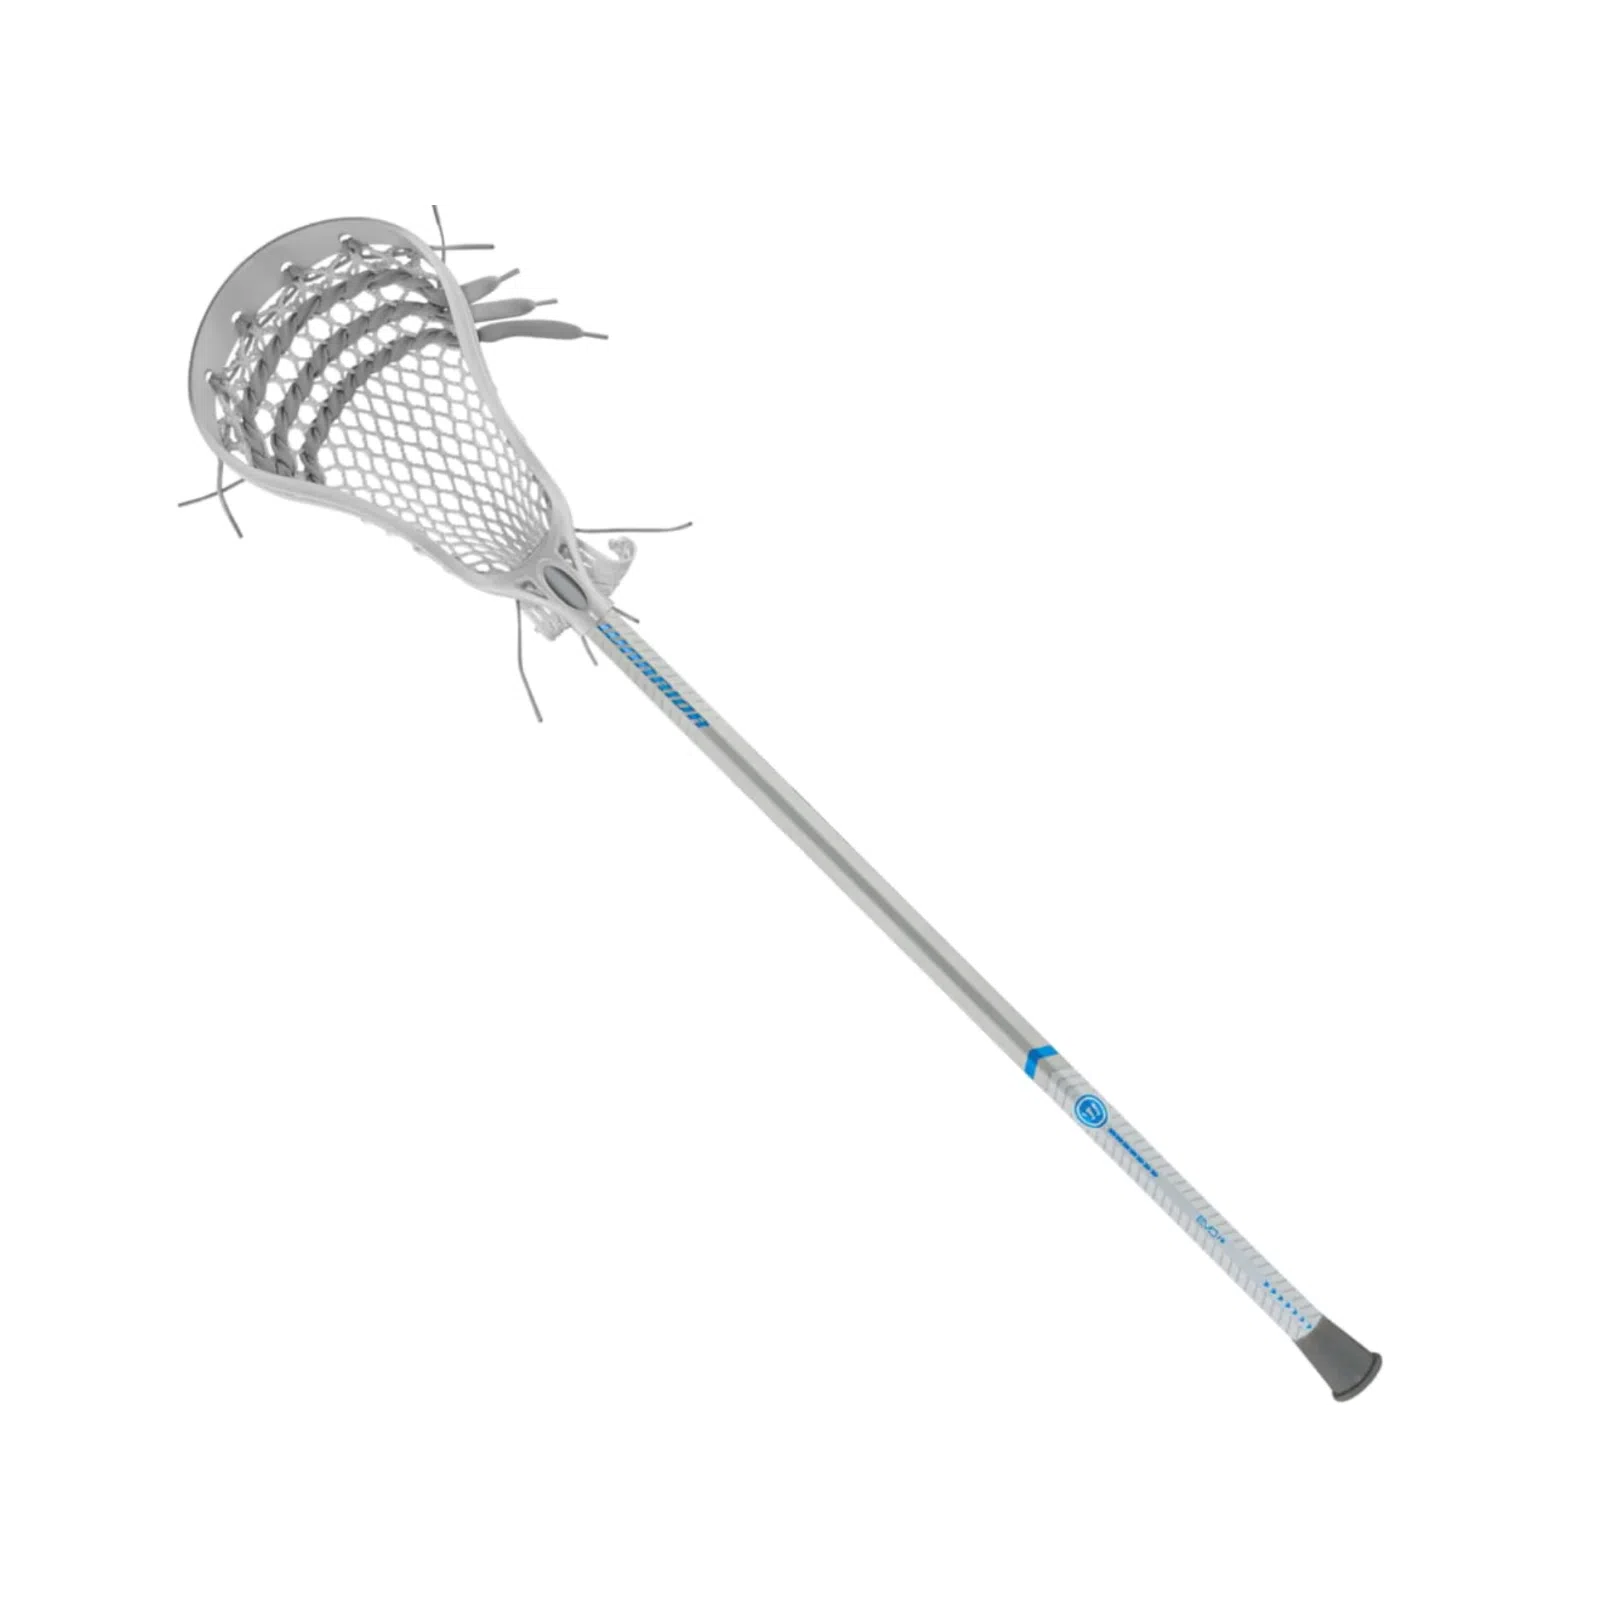 Warrior Evo Junior Complete Lacrosse Stick